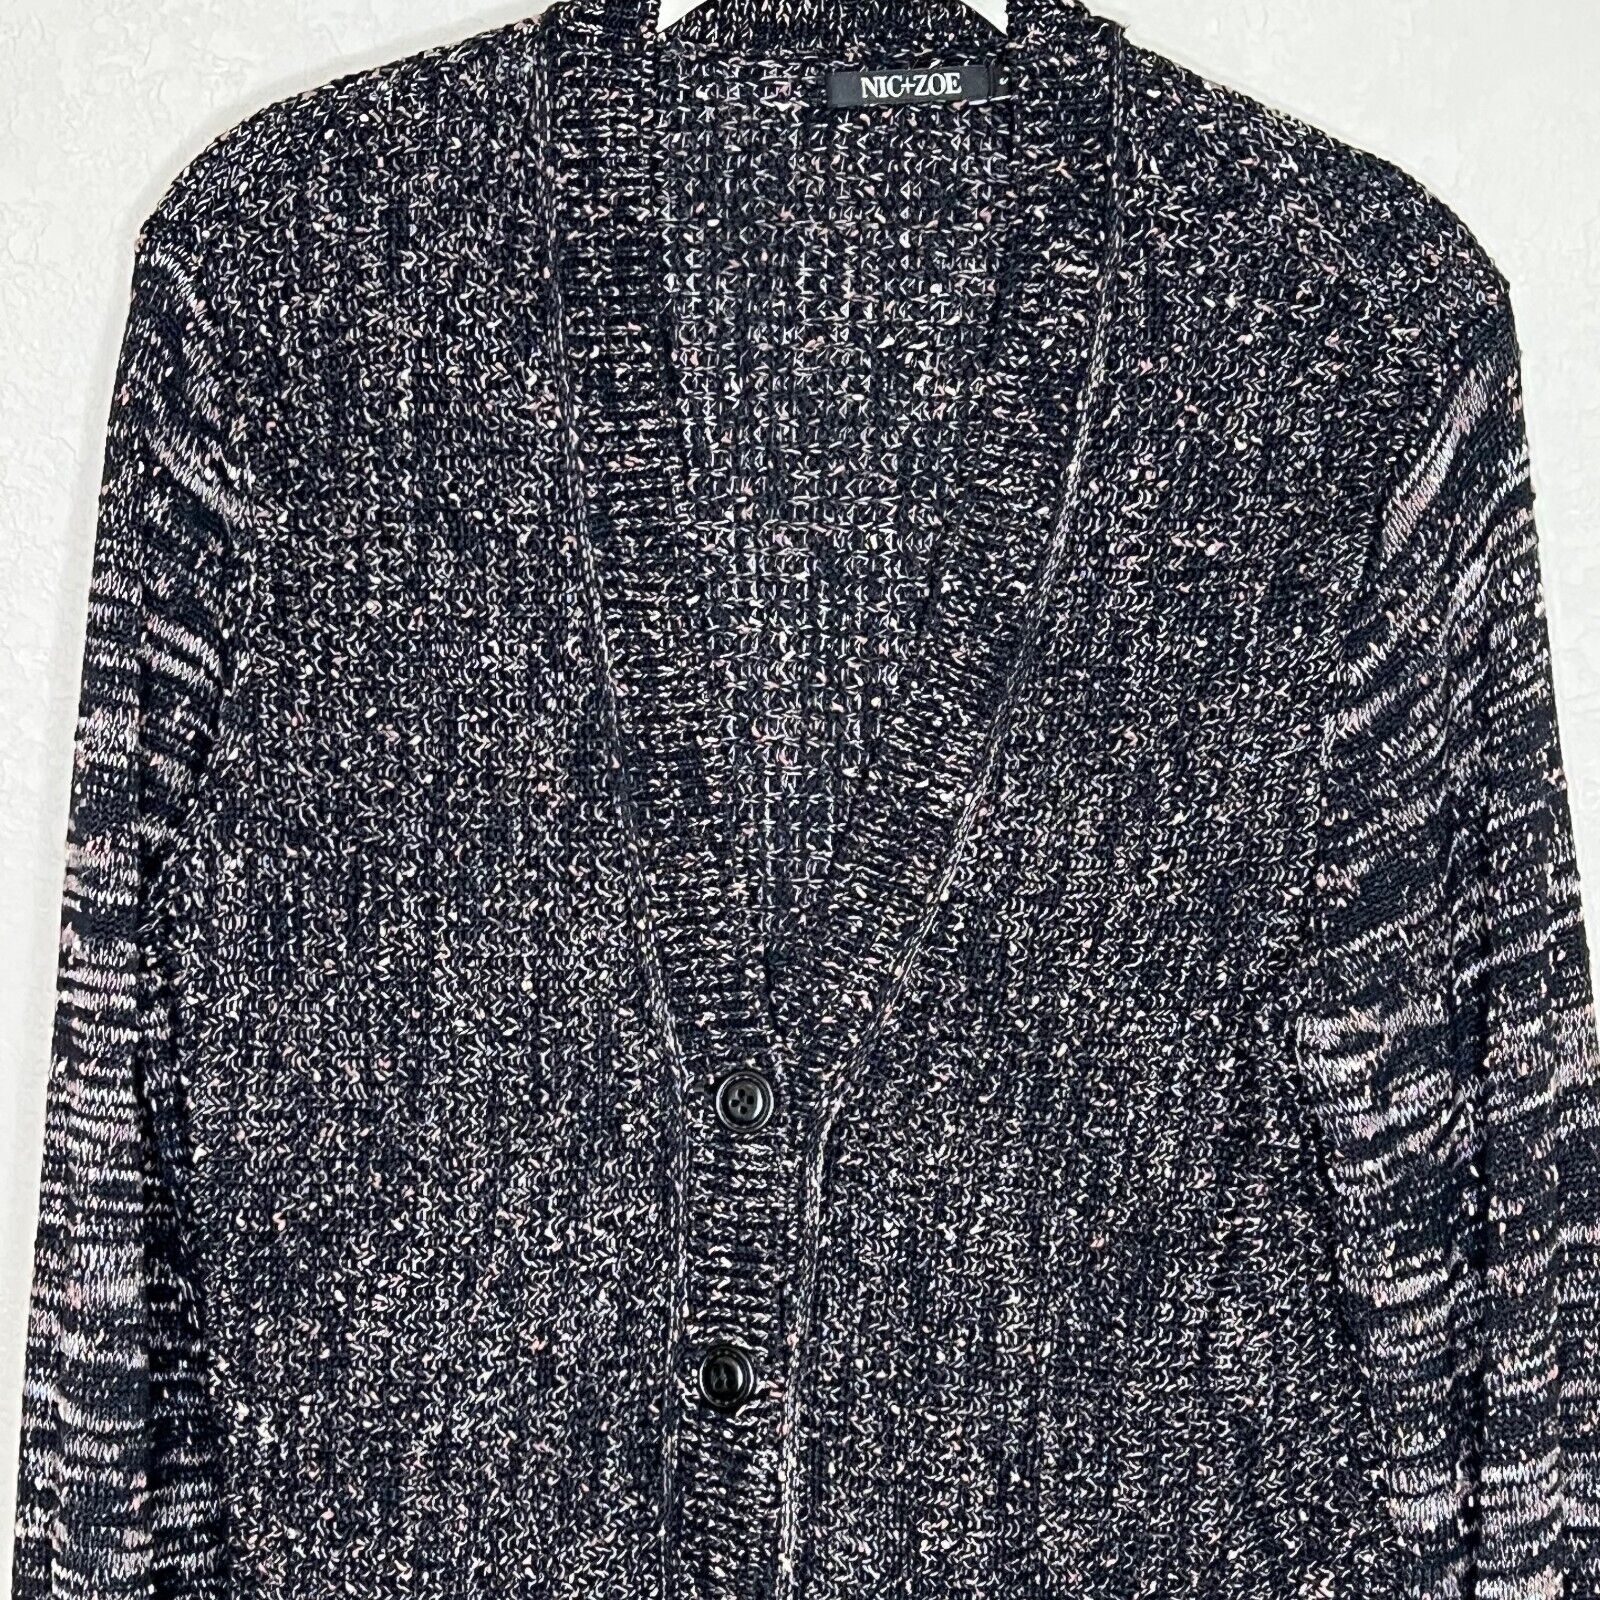 NIC+ZOE Black Speckled Peplum Cardigan Sweater Size Small